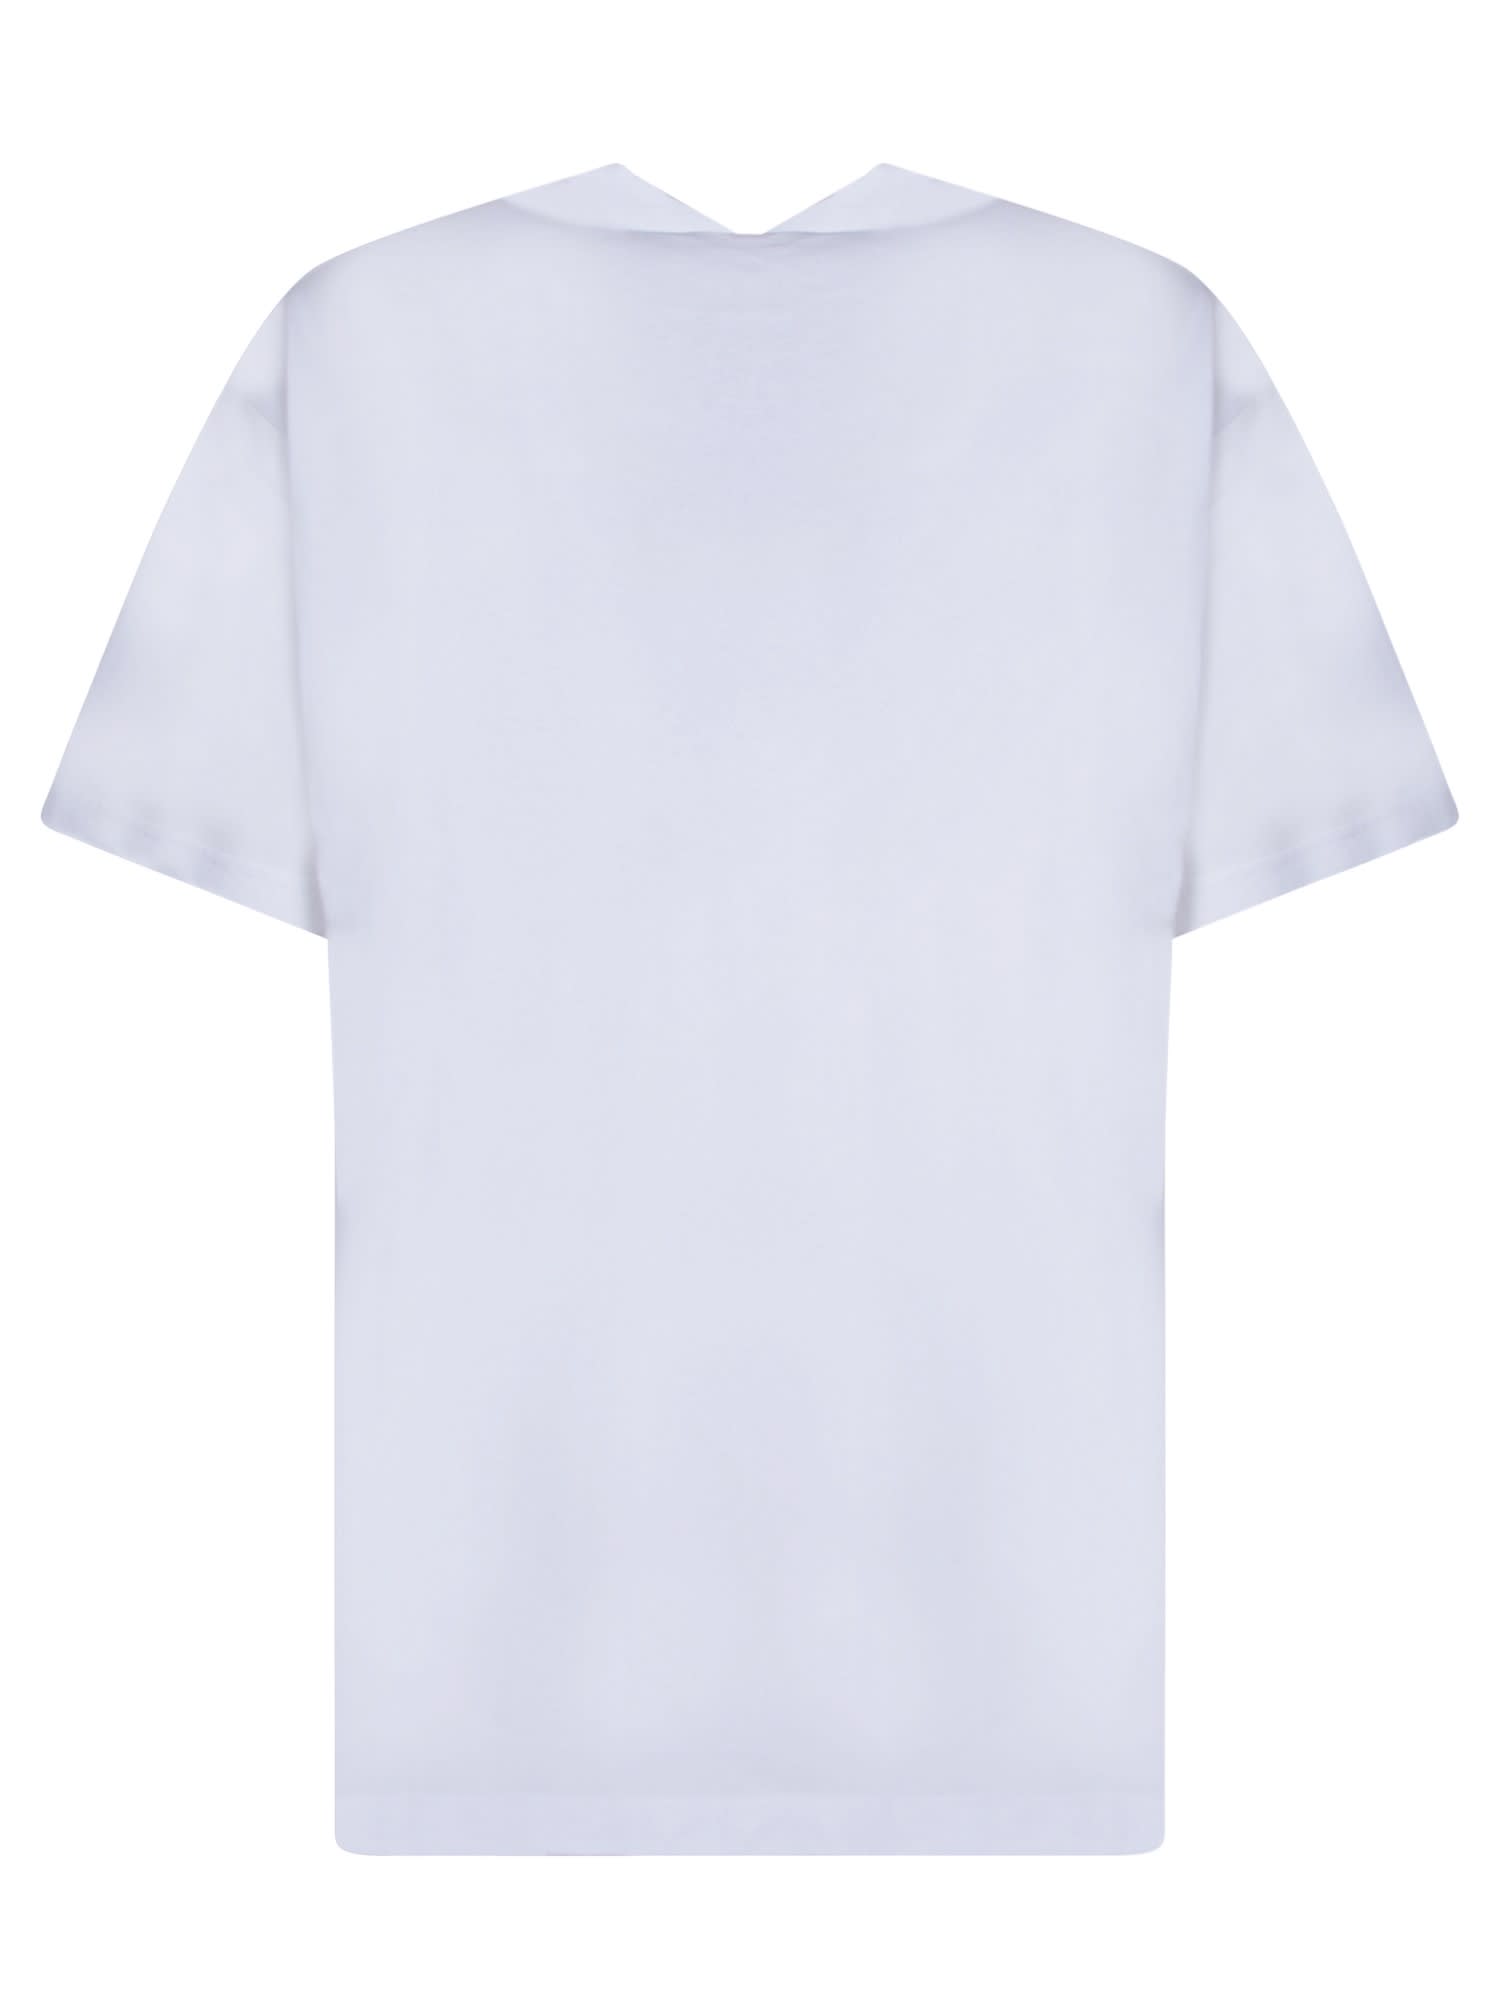 Shop Fuct Oval Pee Girl White T-shirt